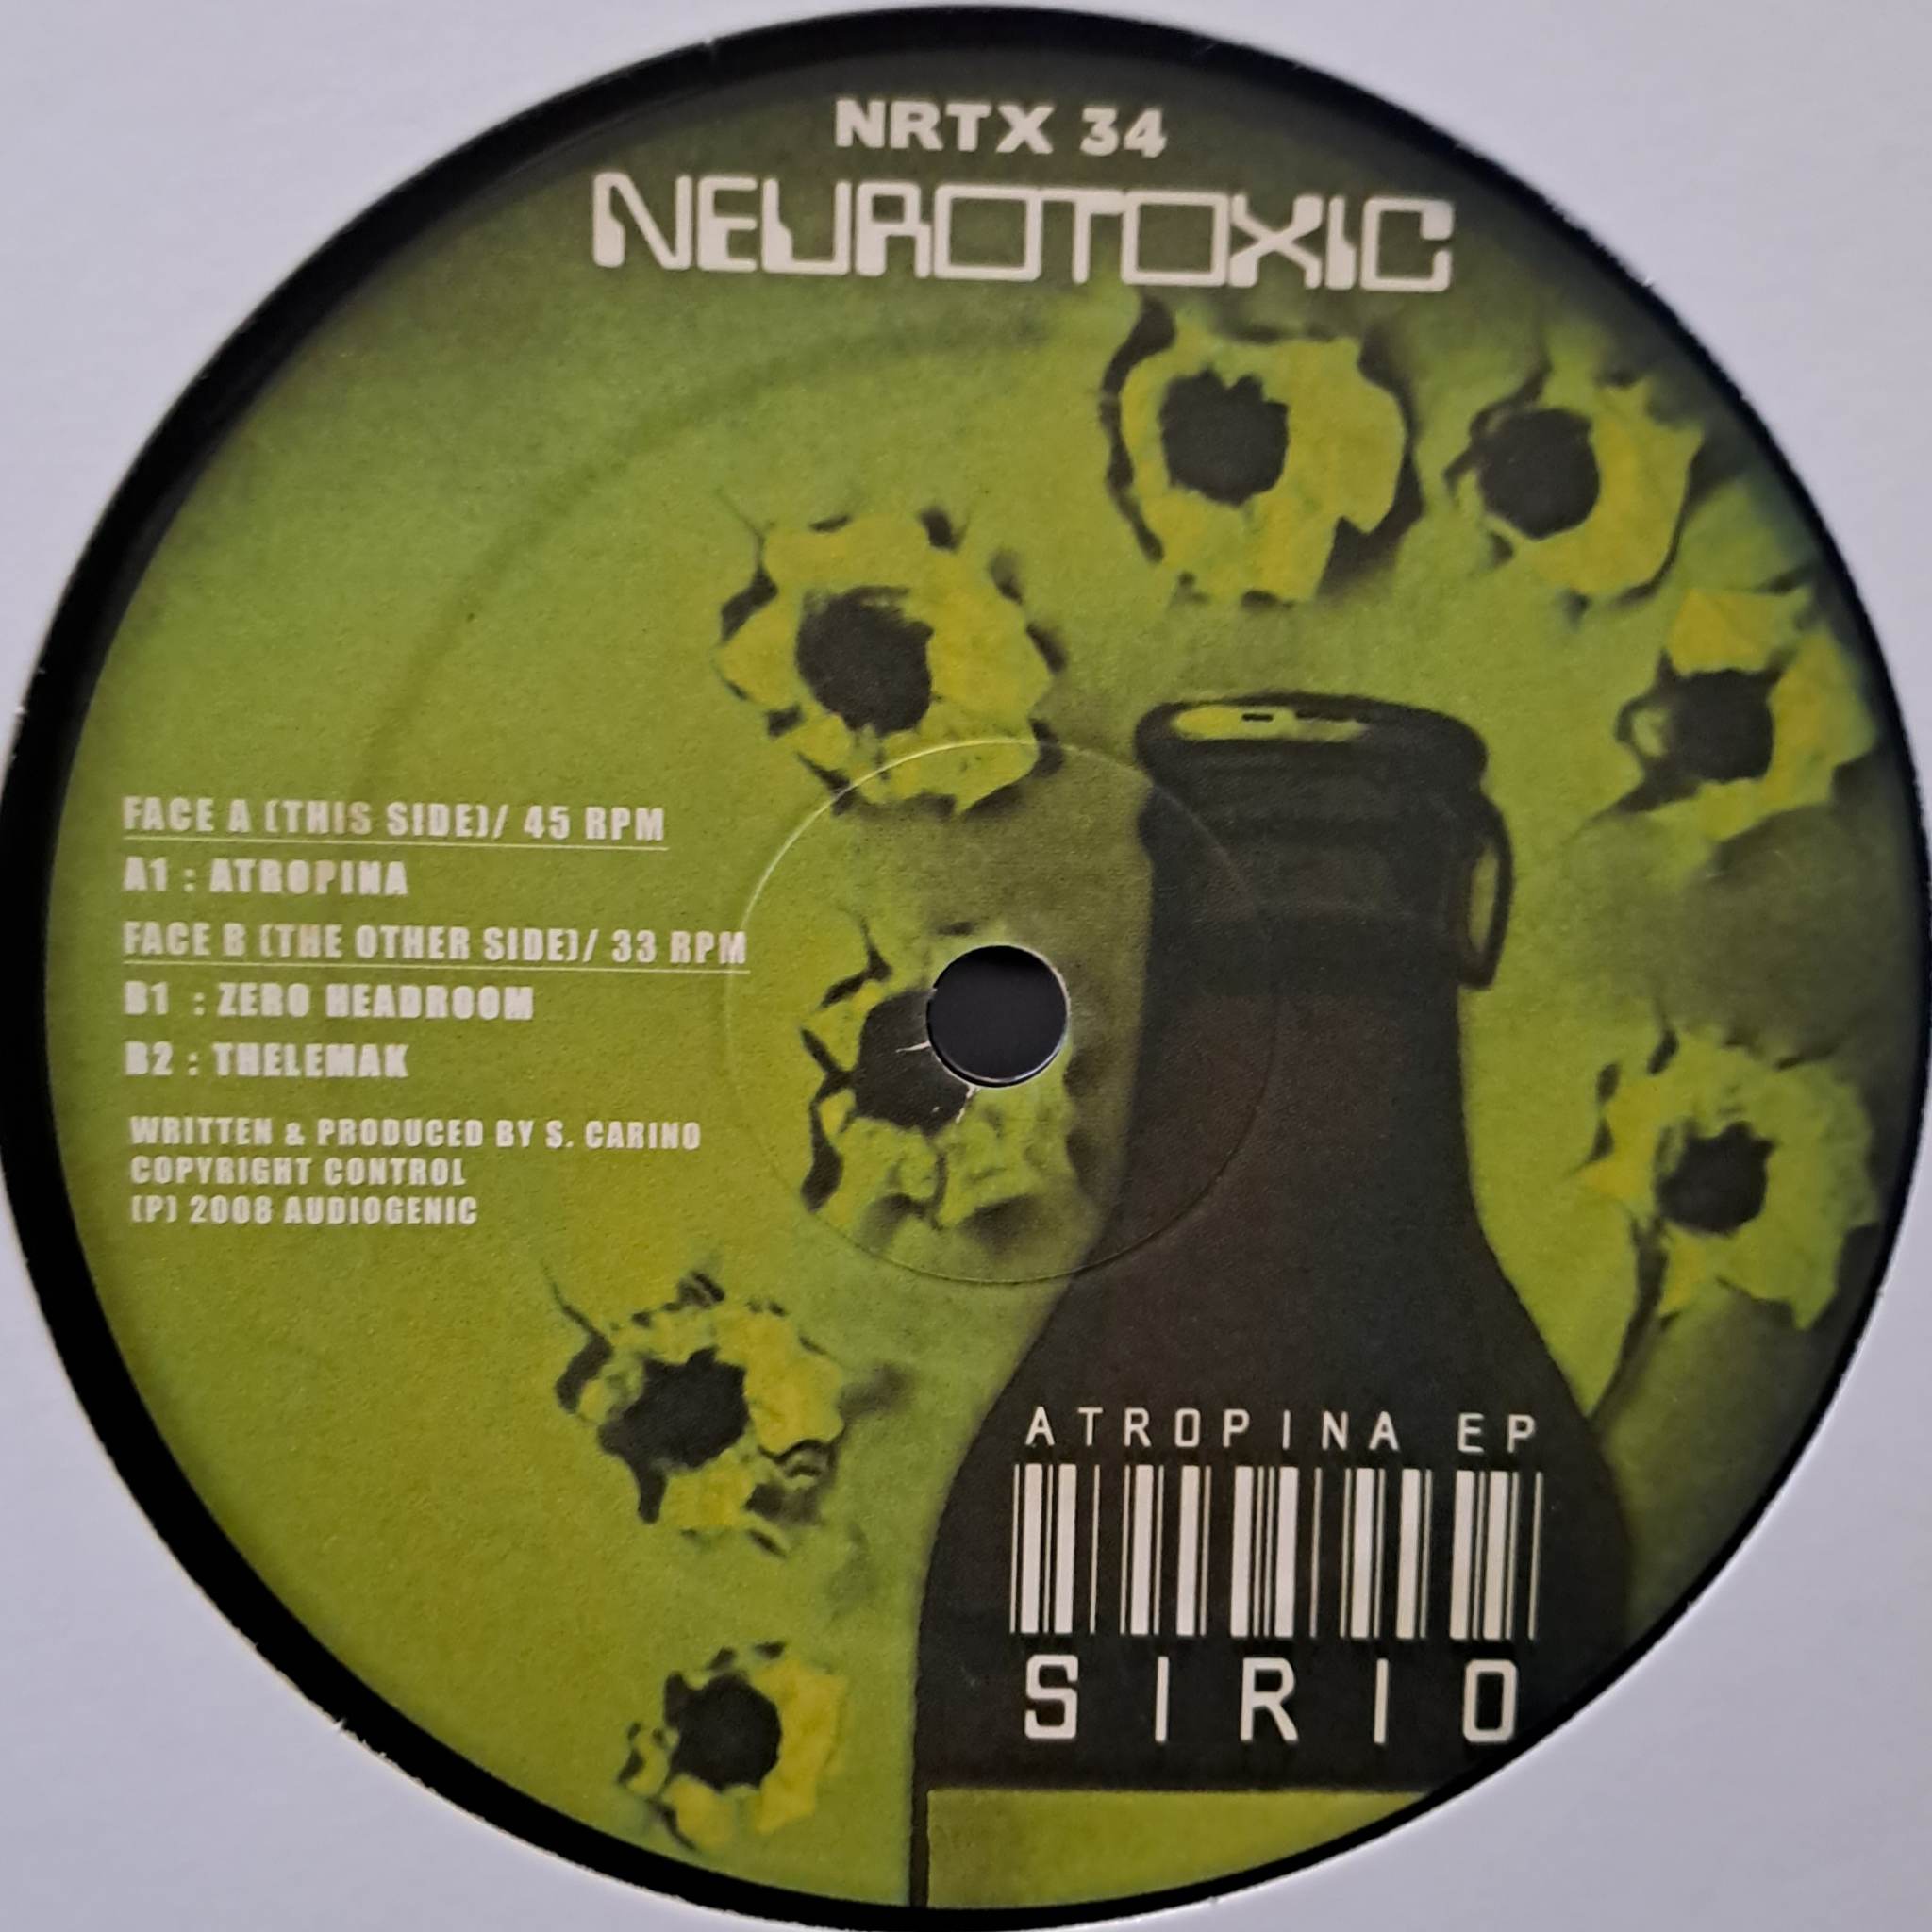 Neurotoxic 34 - vinyle hardcore